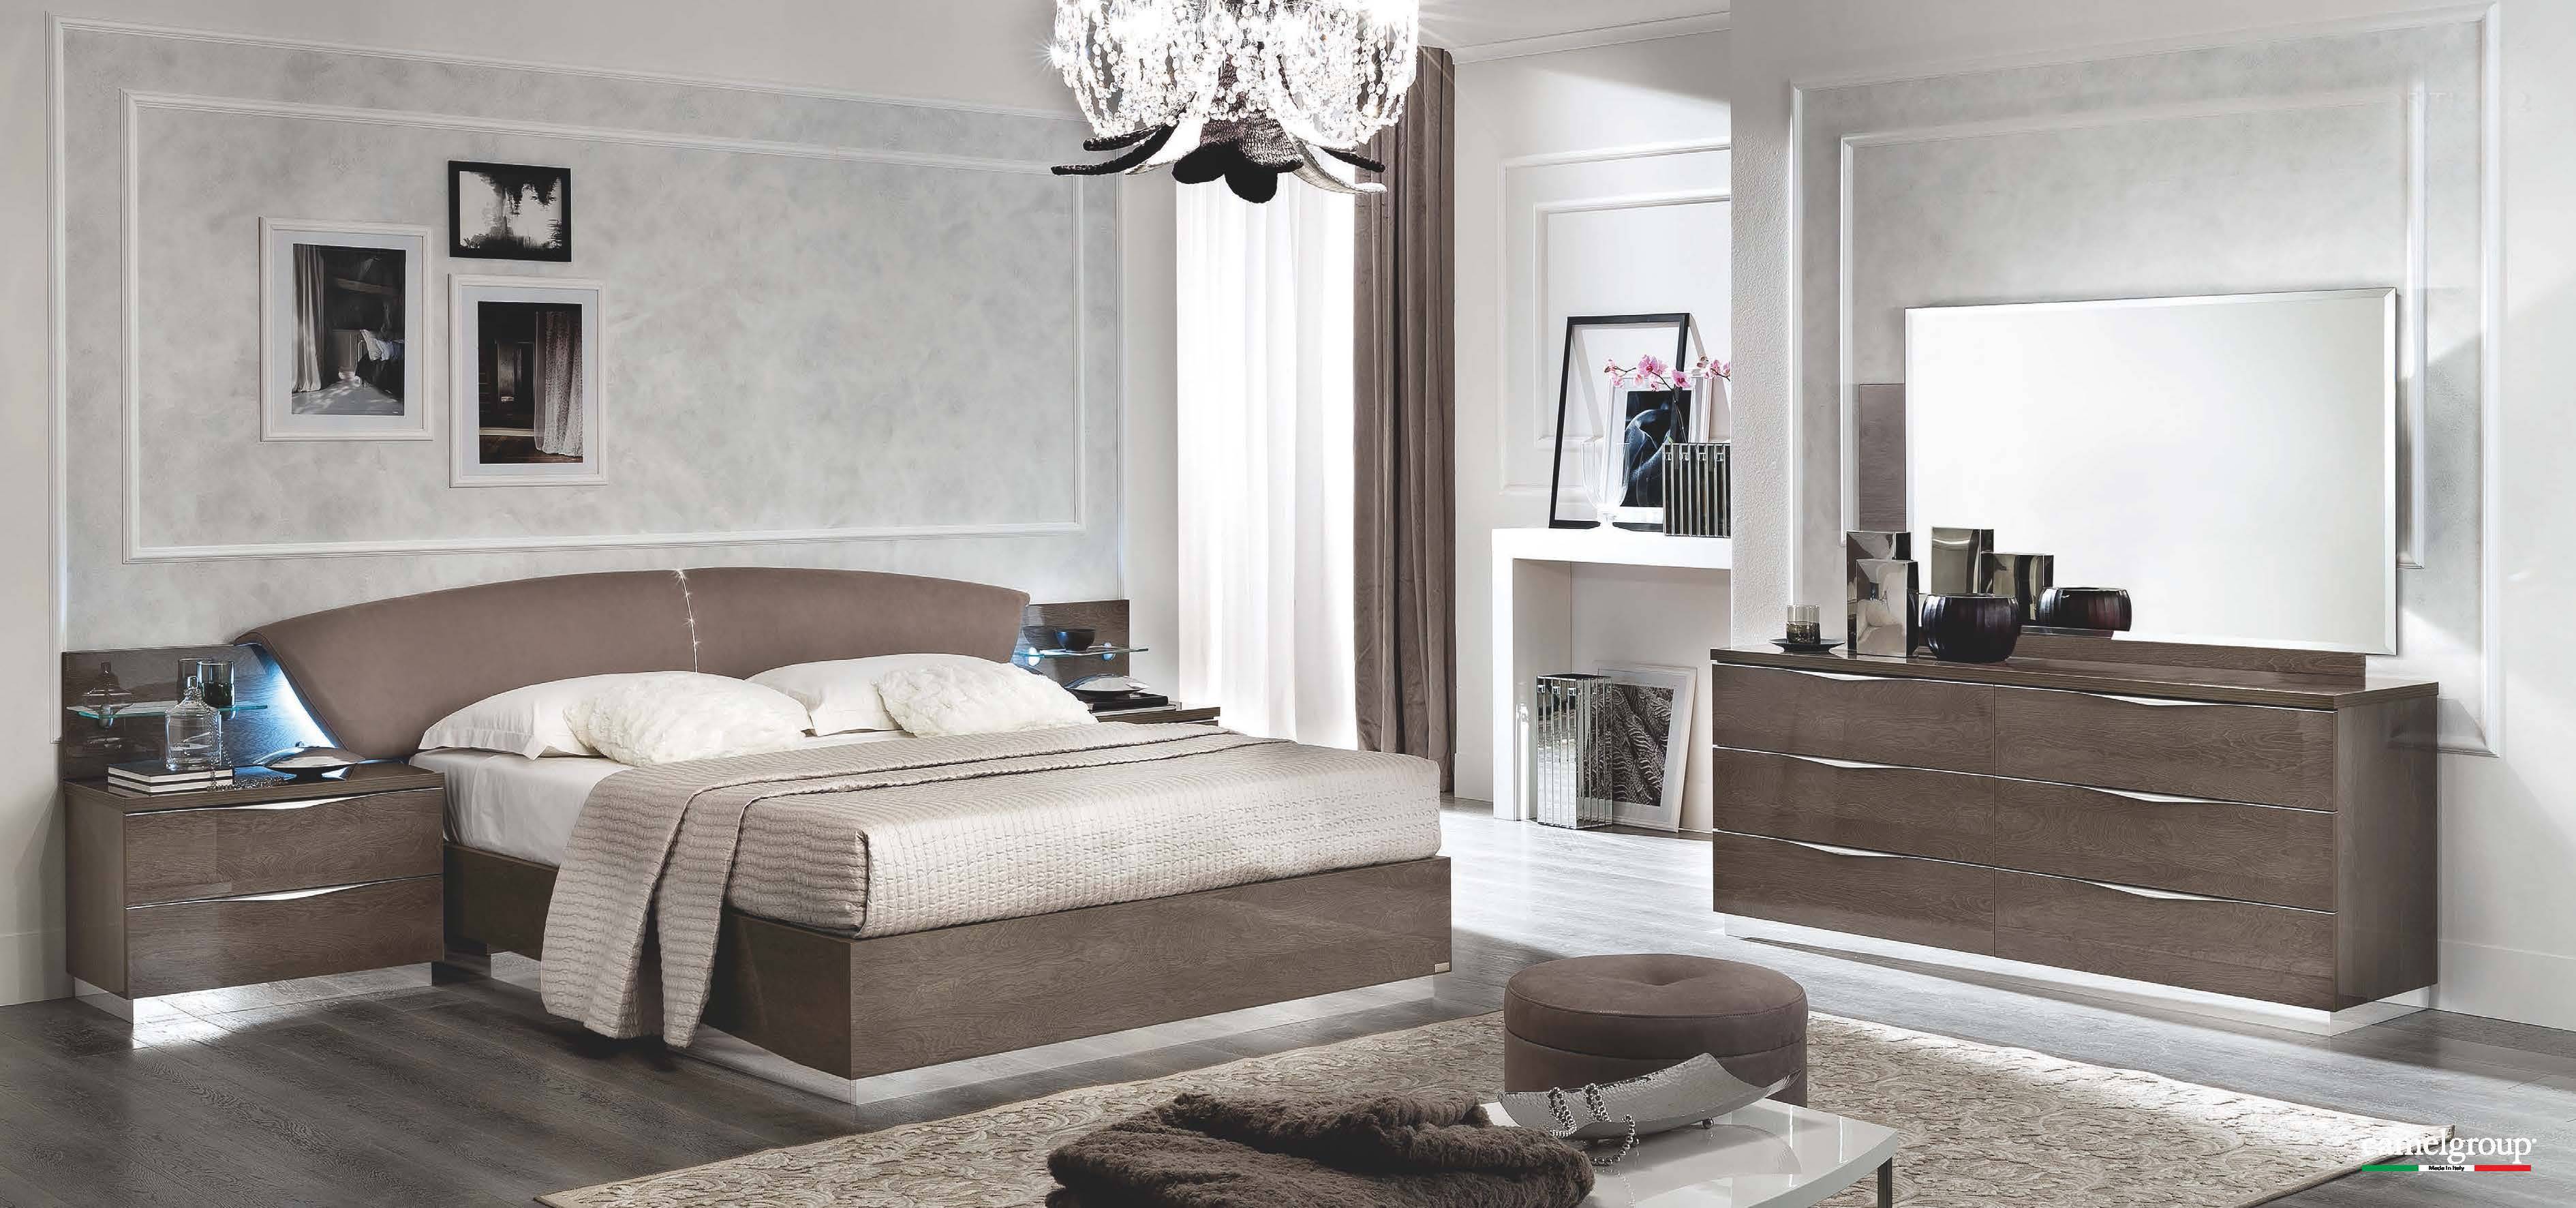 designer italian bedroom furniture nella vettra